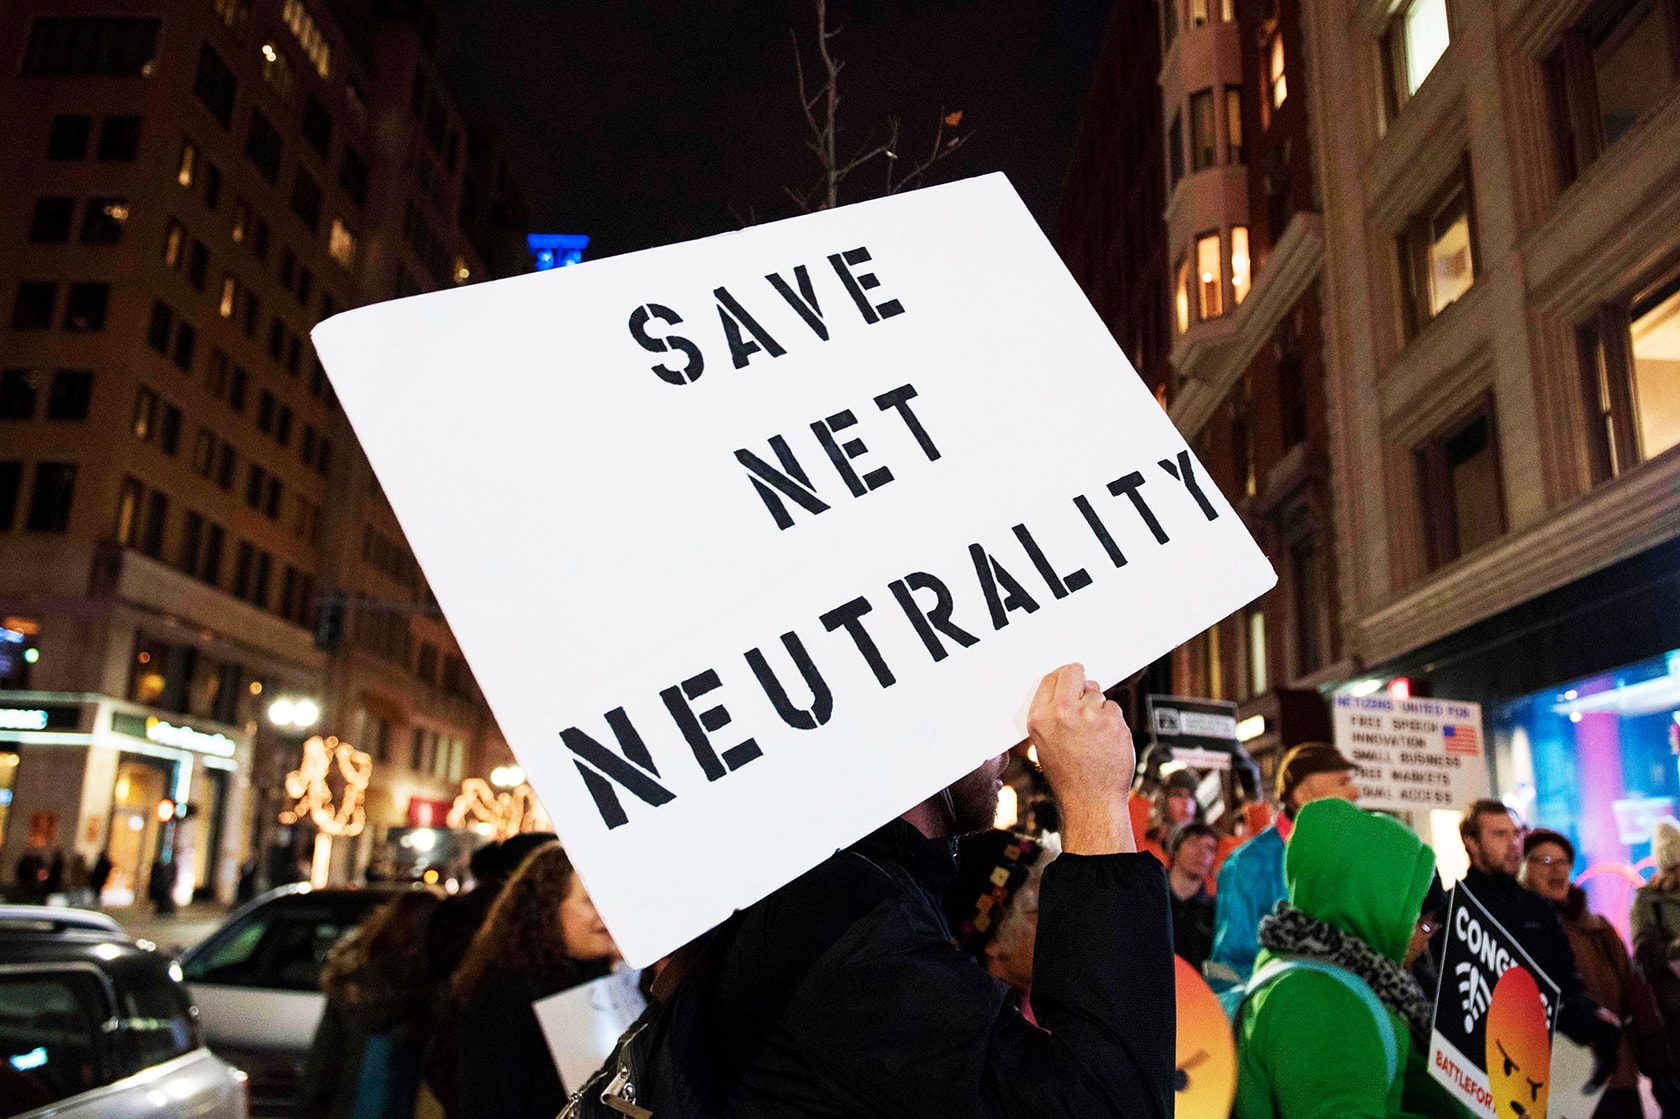 Senate Vote Net Neutrality Saved Internet Ajit Pai Democrat Republican Politics Donald Trump